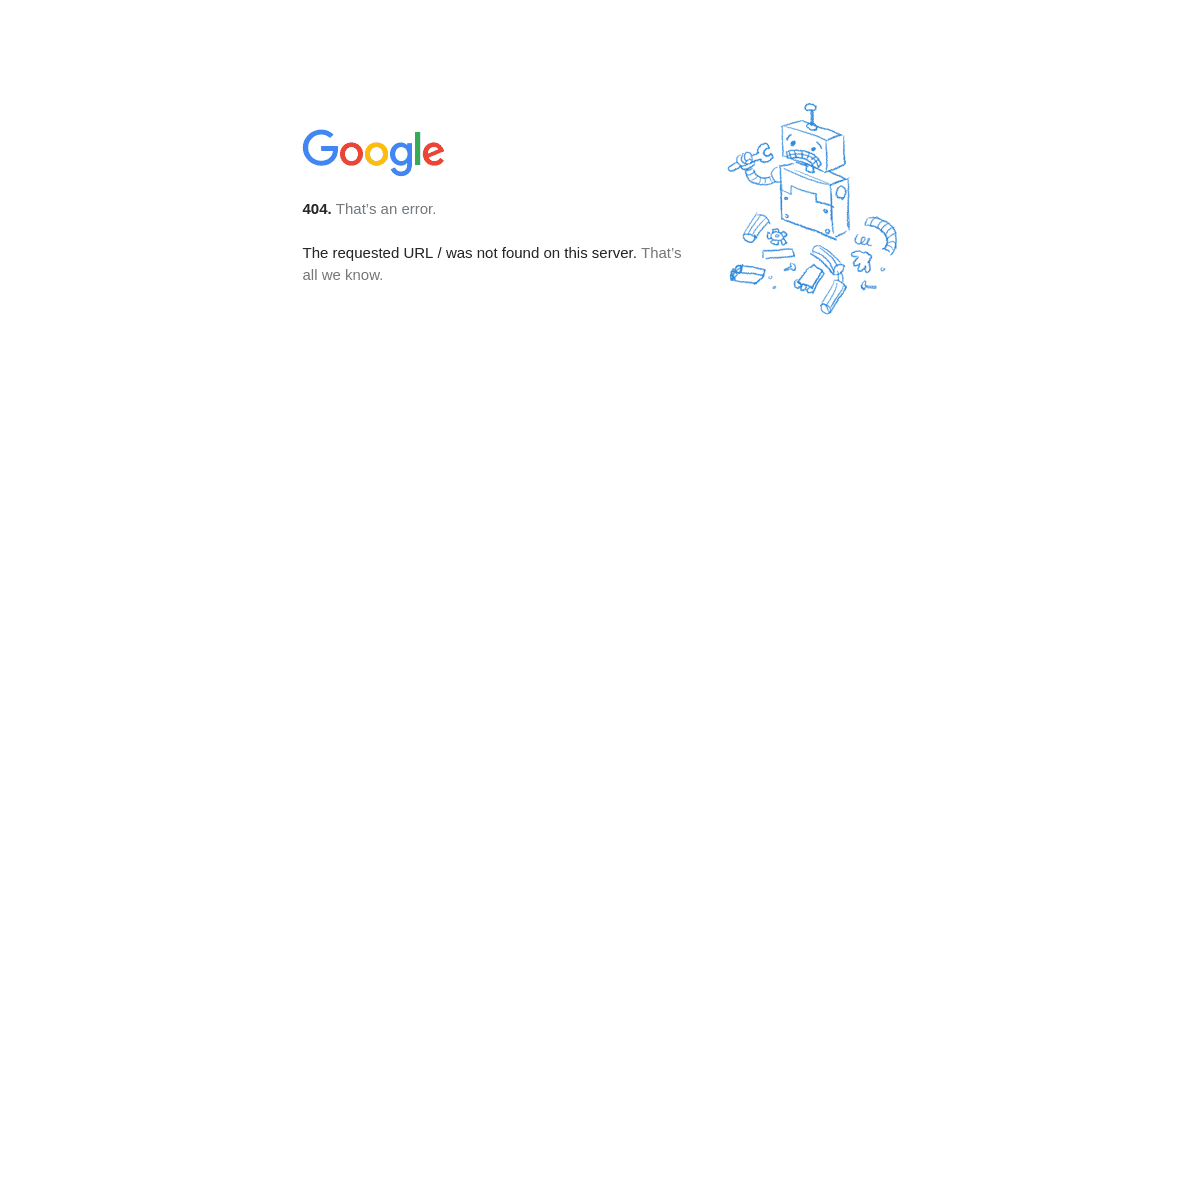 A complete backup of googleapis.com